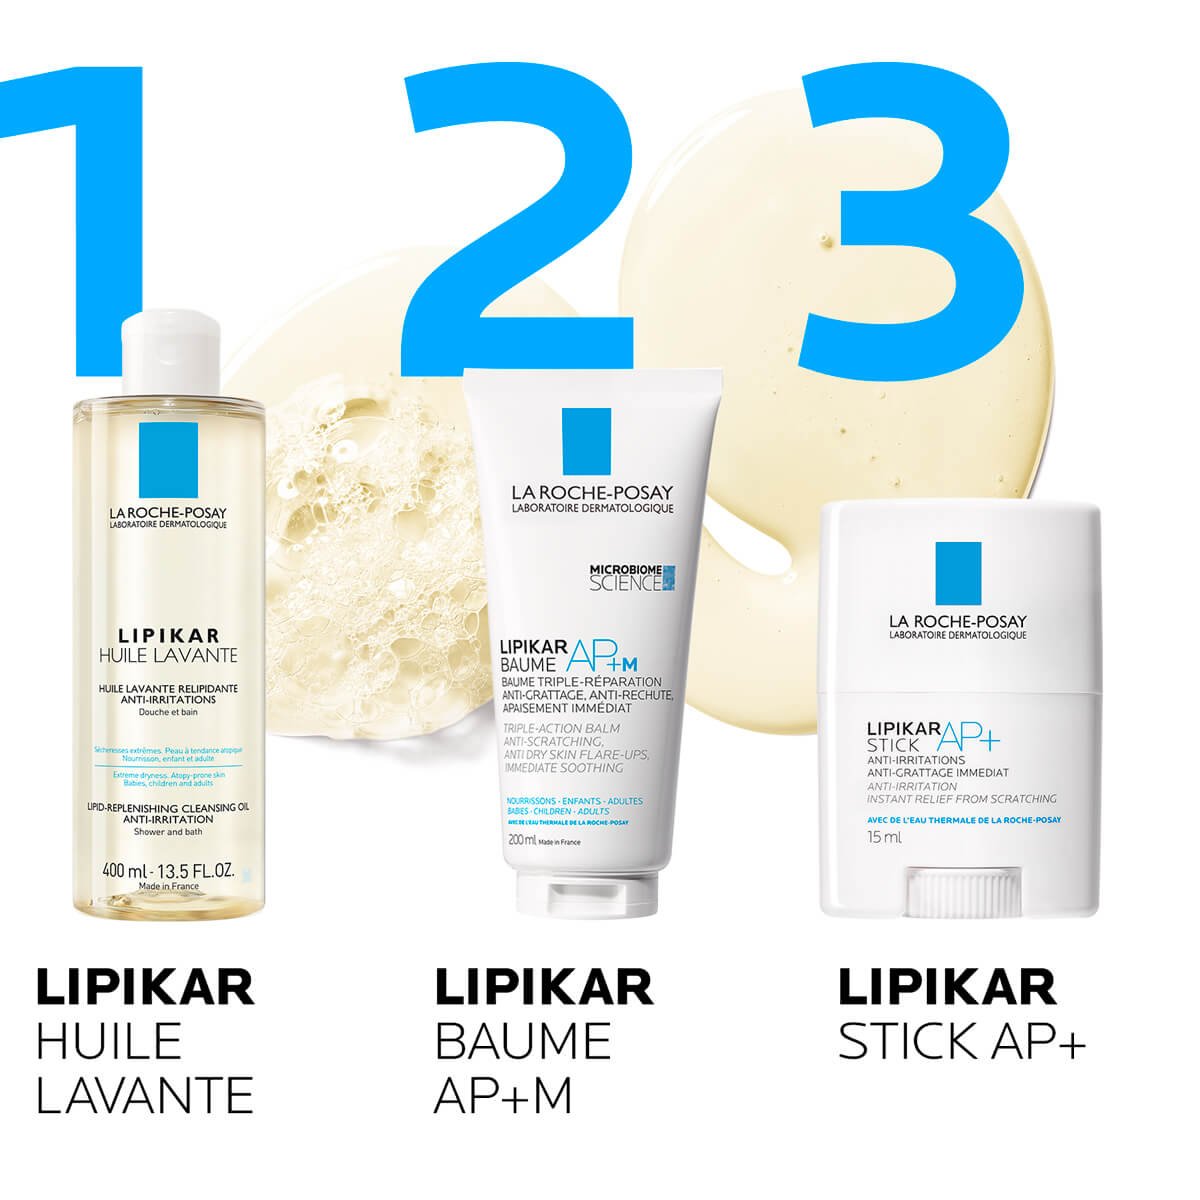 A photo of a bottle of Lipikar Huile Lavante AP+ skincare product on a white background